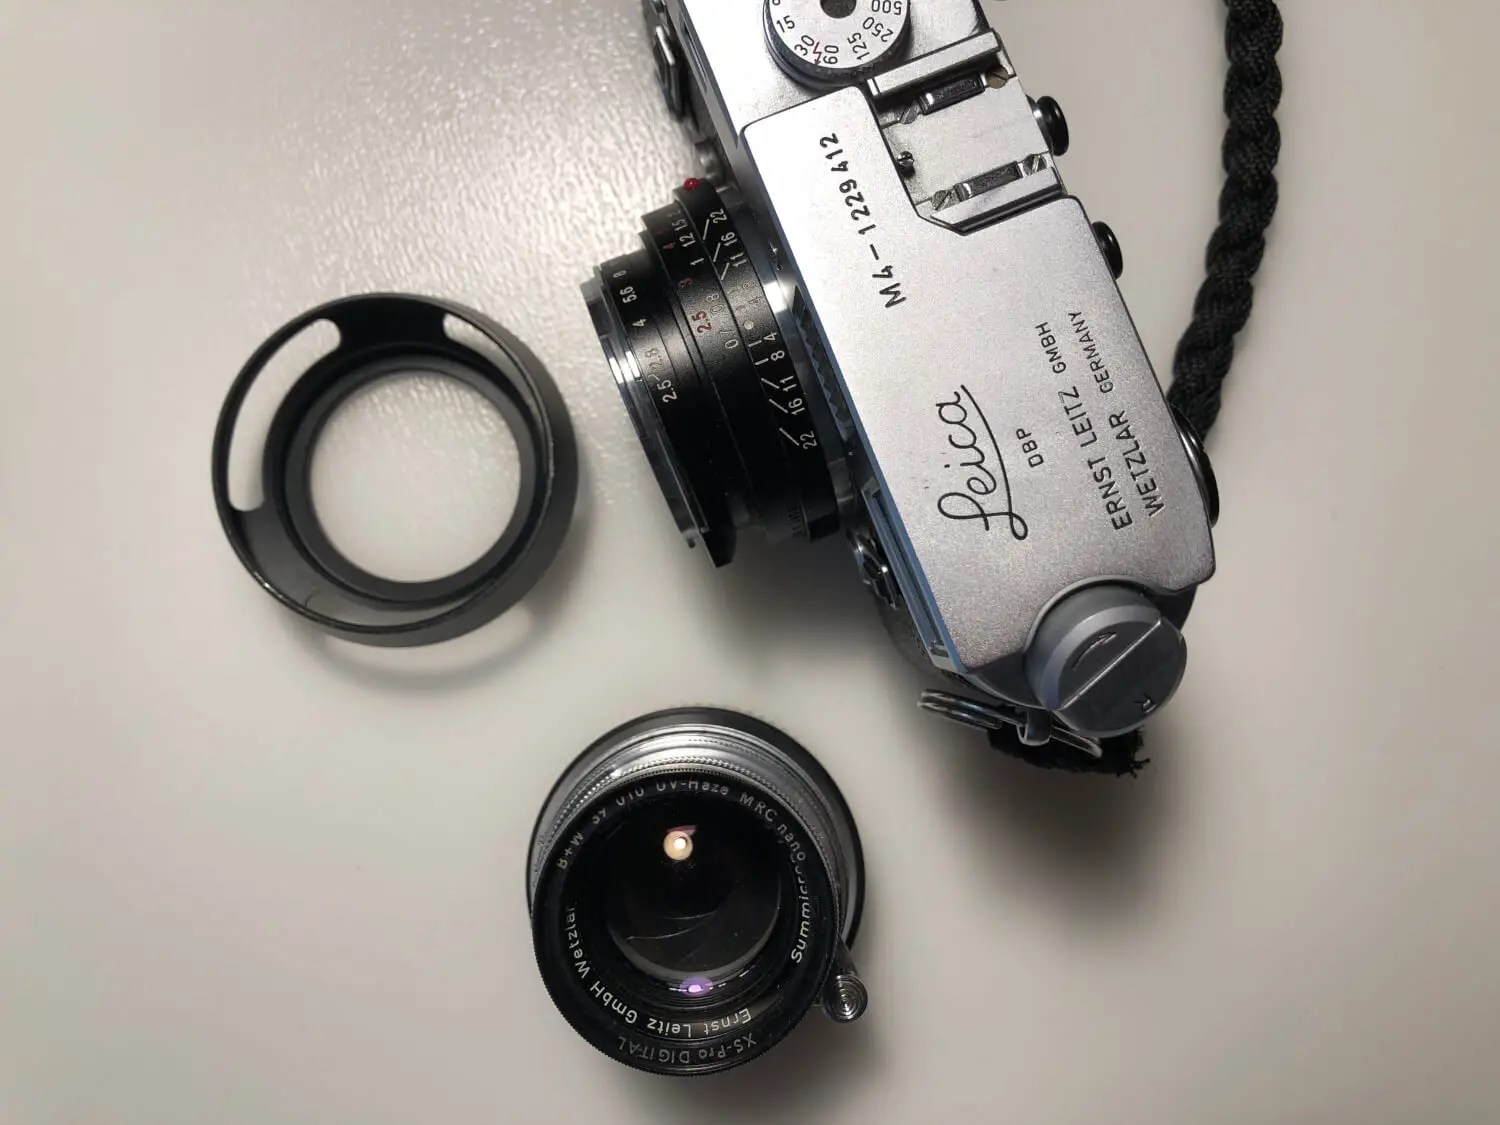 Enter the Leica M4: Upgrading my Barnack Leica